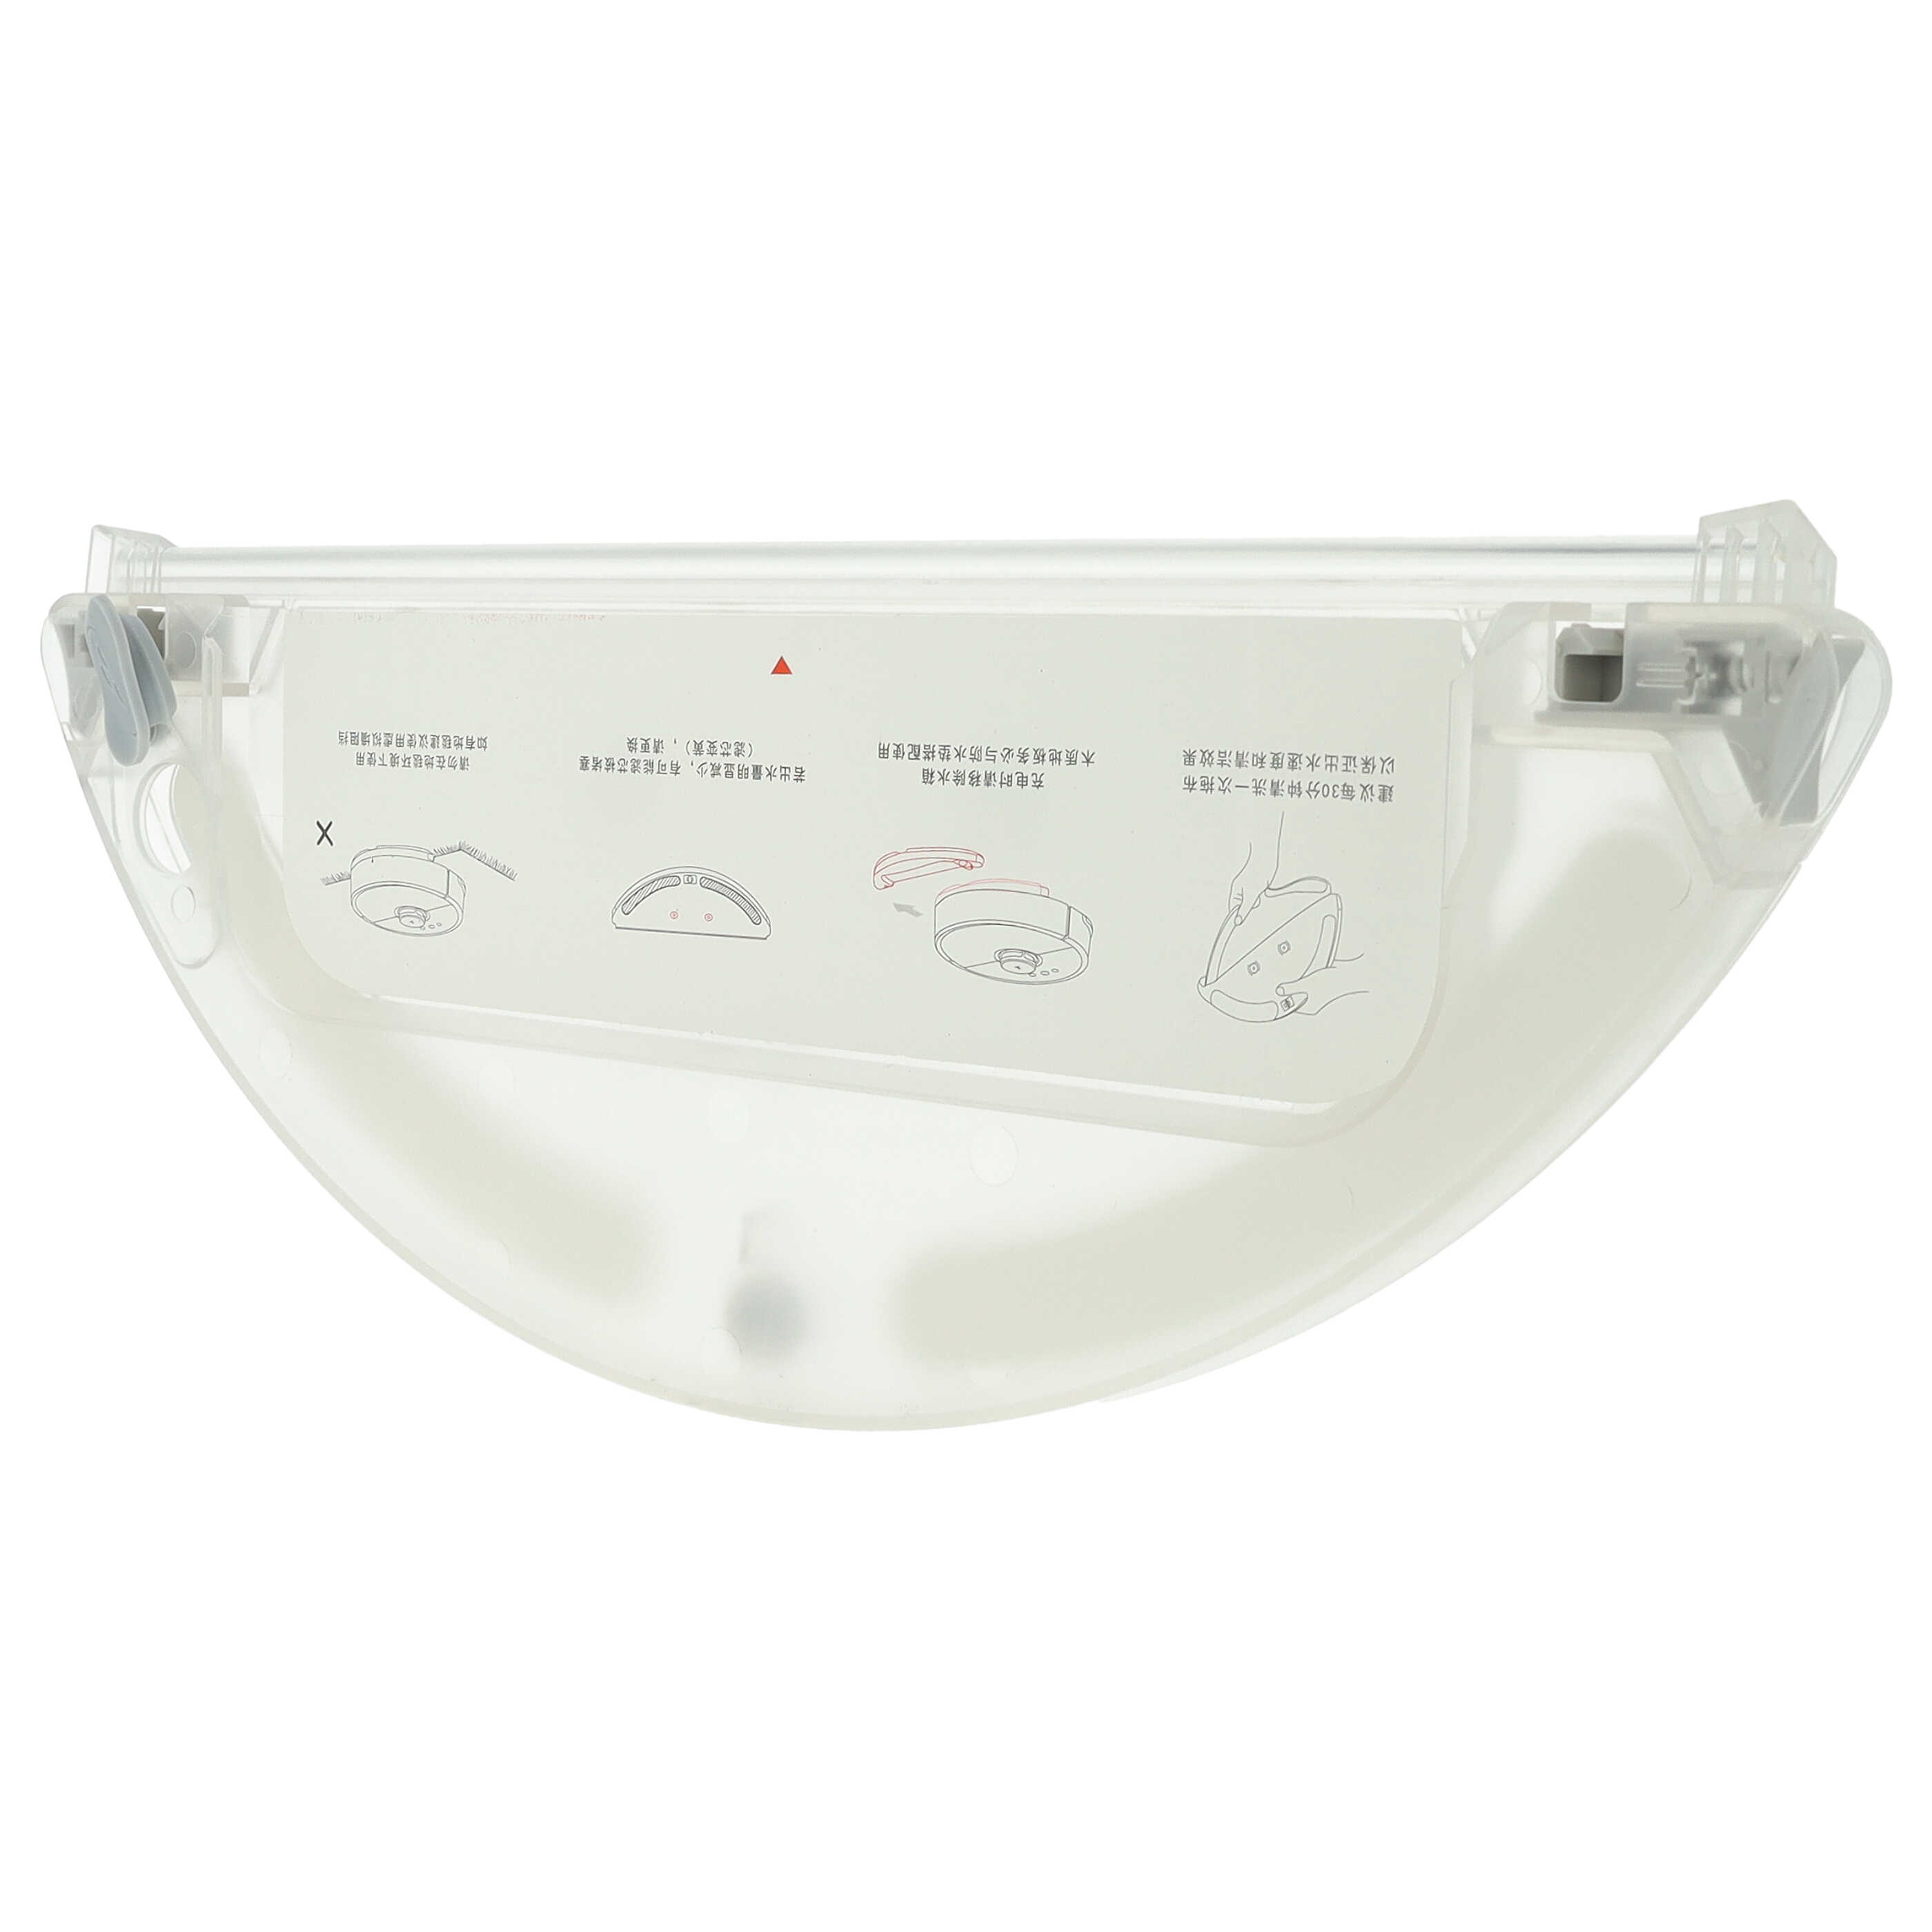 Mop Plate suitable for Xiaomi Roborock S6 Robot Vacuum Cleaner - 140 ml Capacity, ABS Plastic, transparent